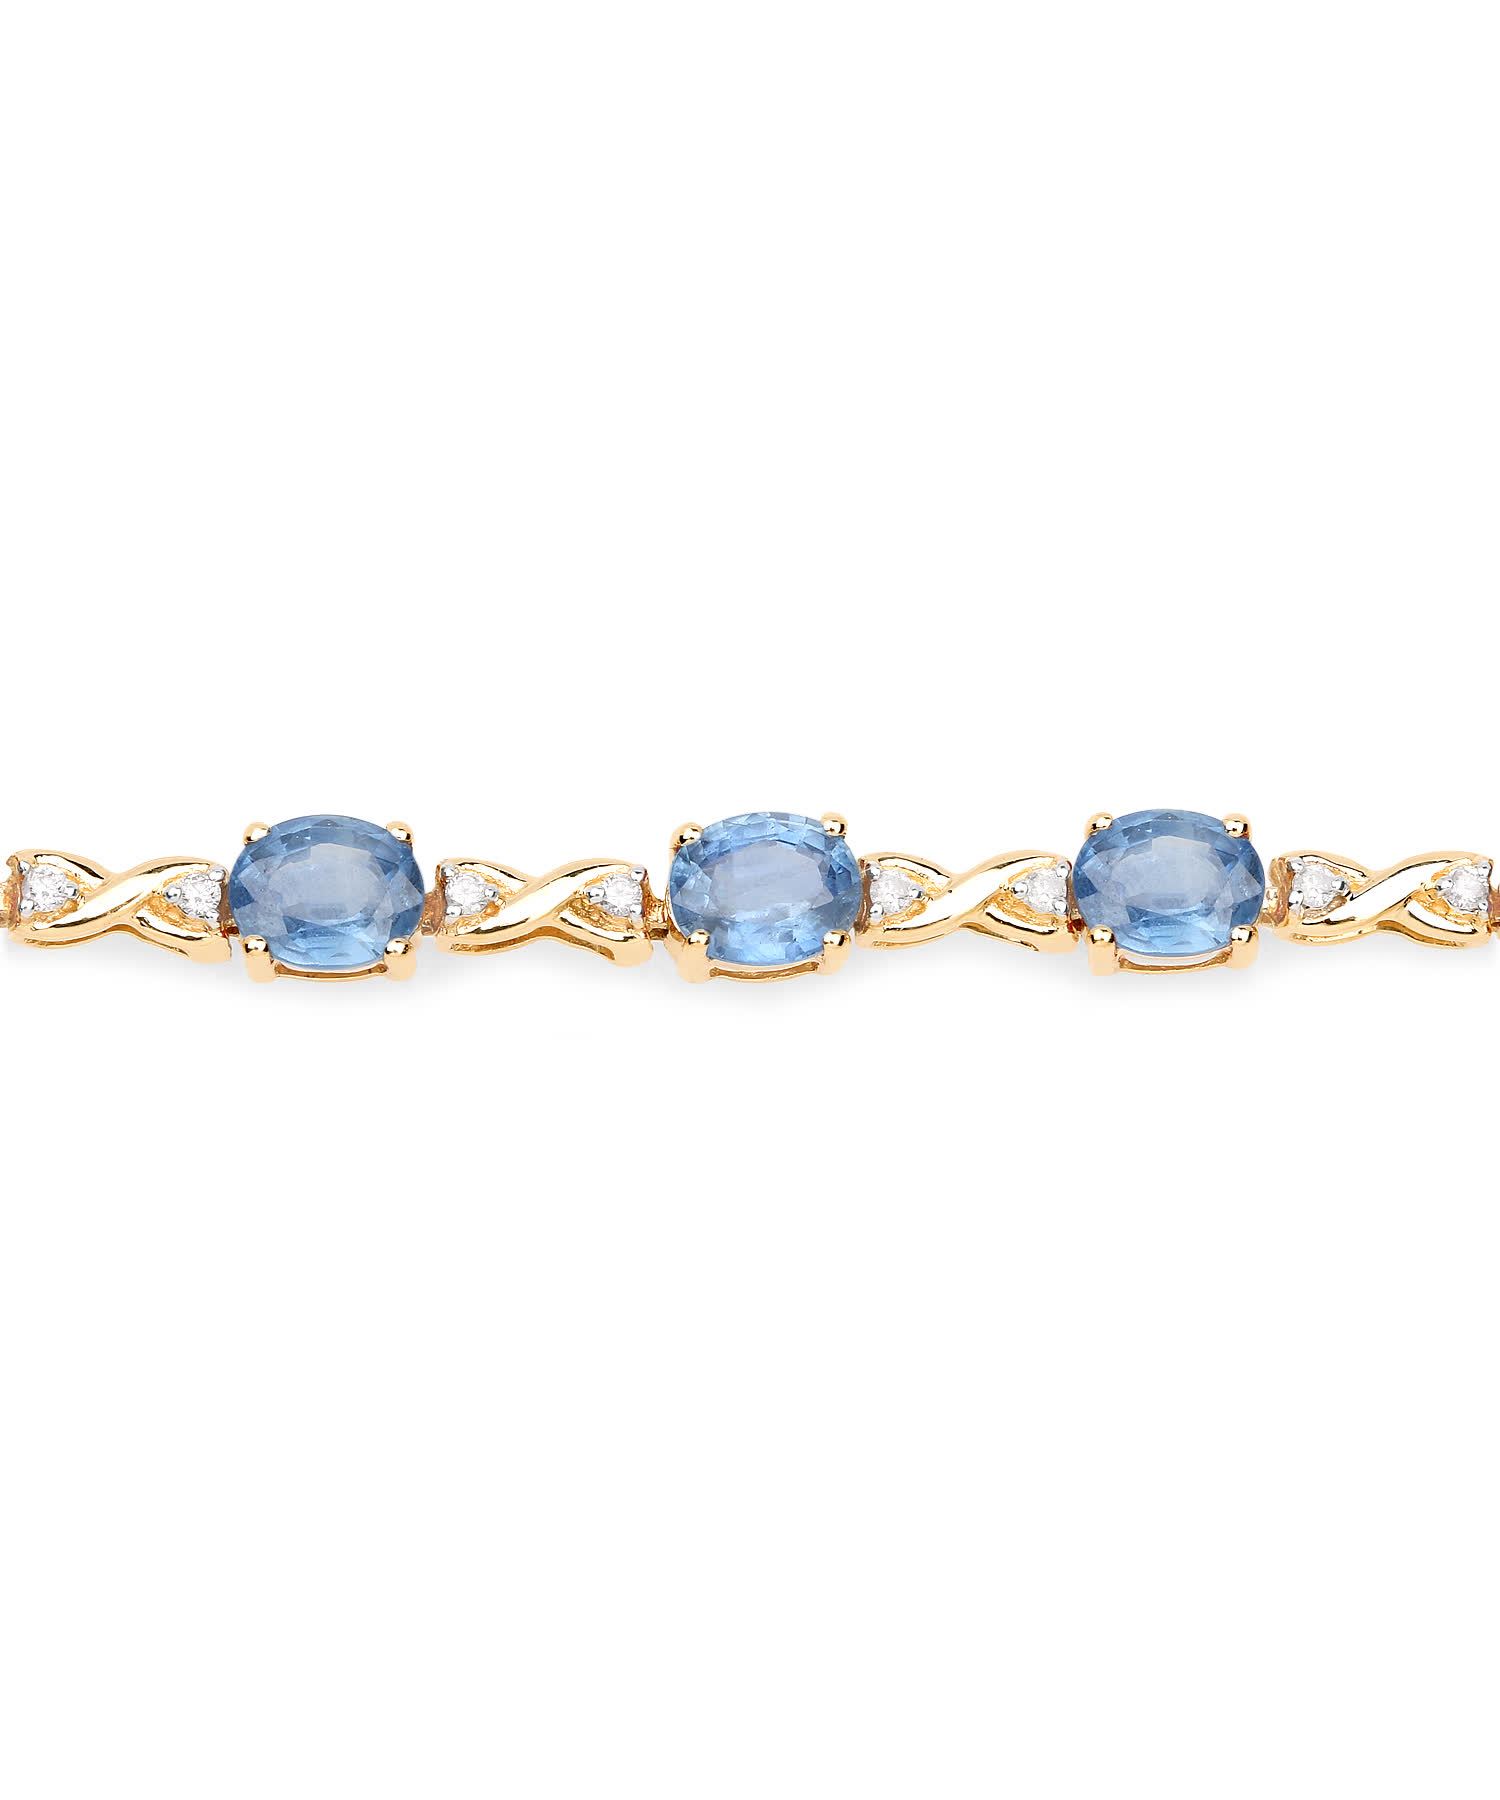 7.81ctw Natural Blue Sapphire and Diamond 14k Gold Link Bracelet View 2